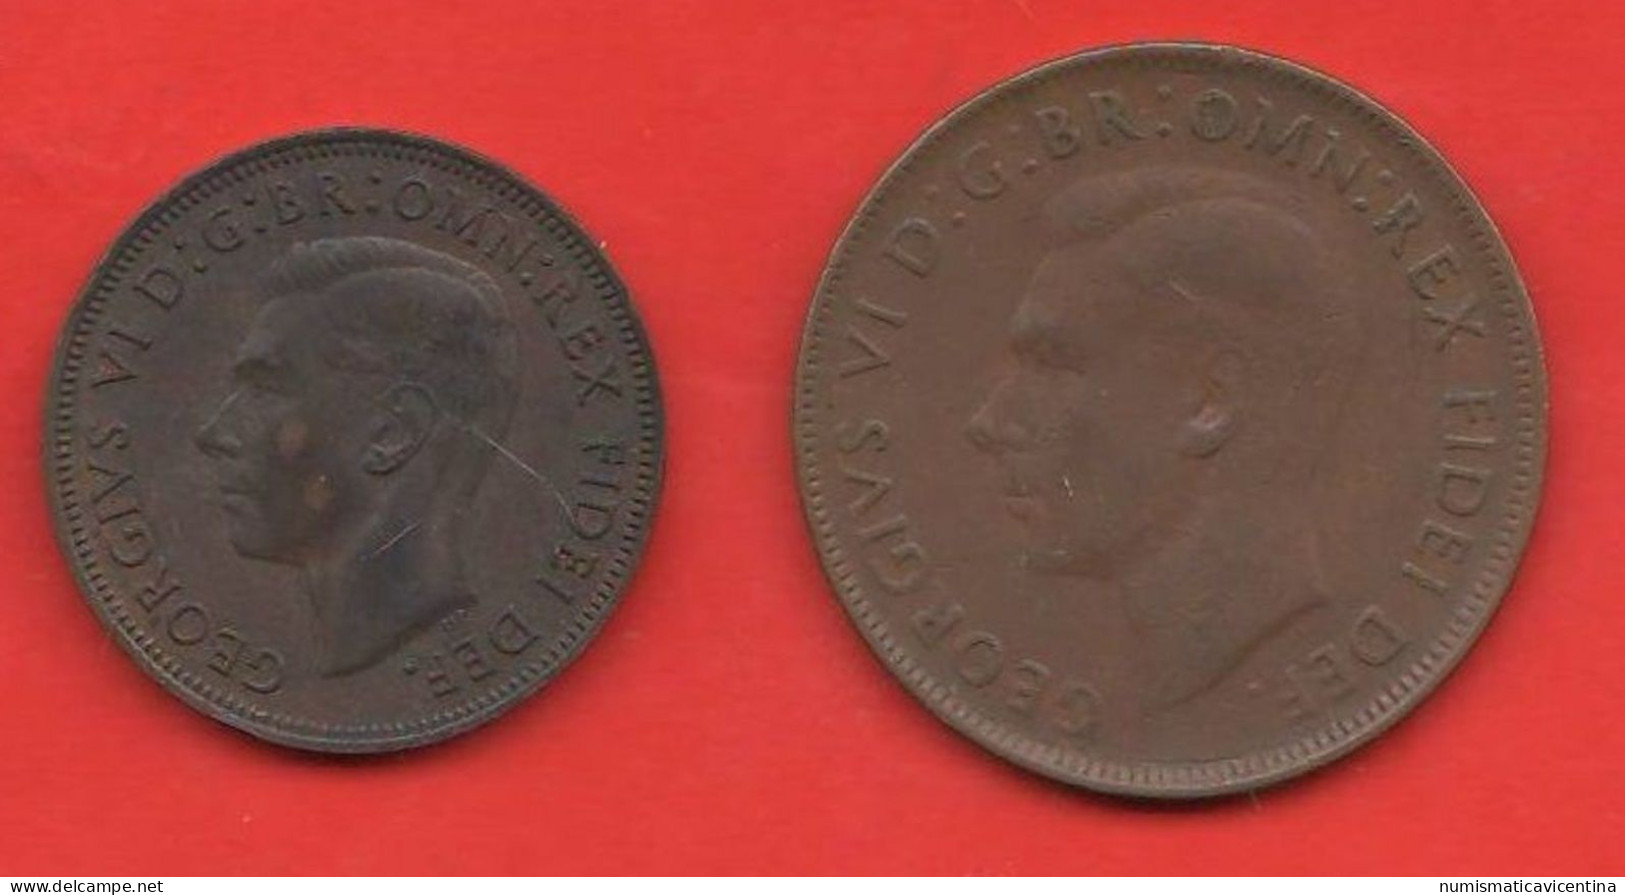 Australia 1 + 1/2 Penny Australie King Georgius VI° Bronze Coin - Penny